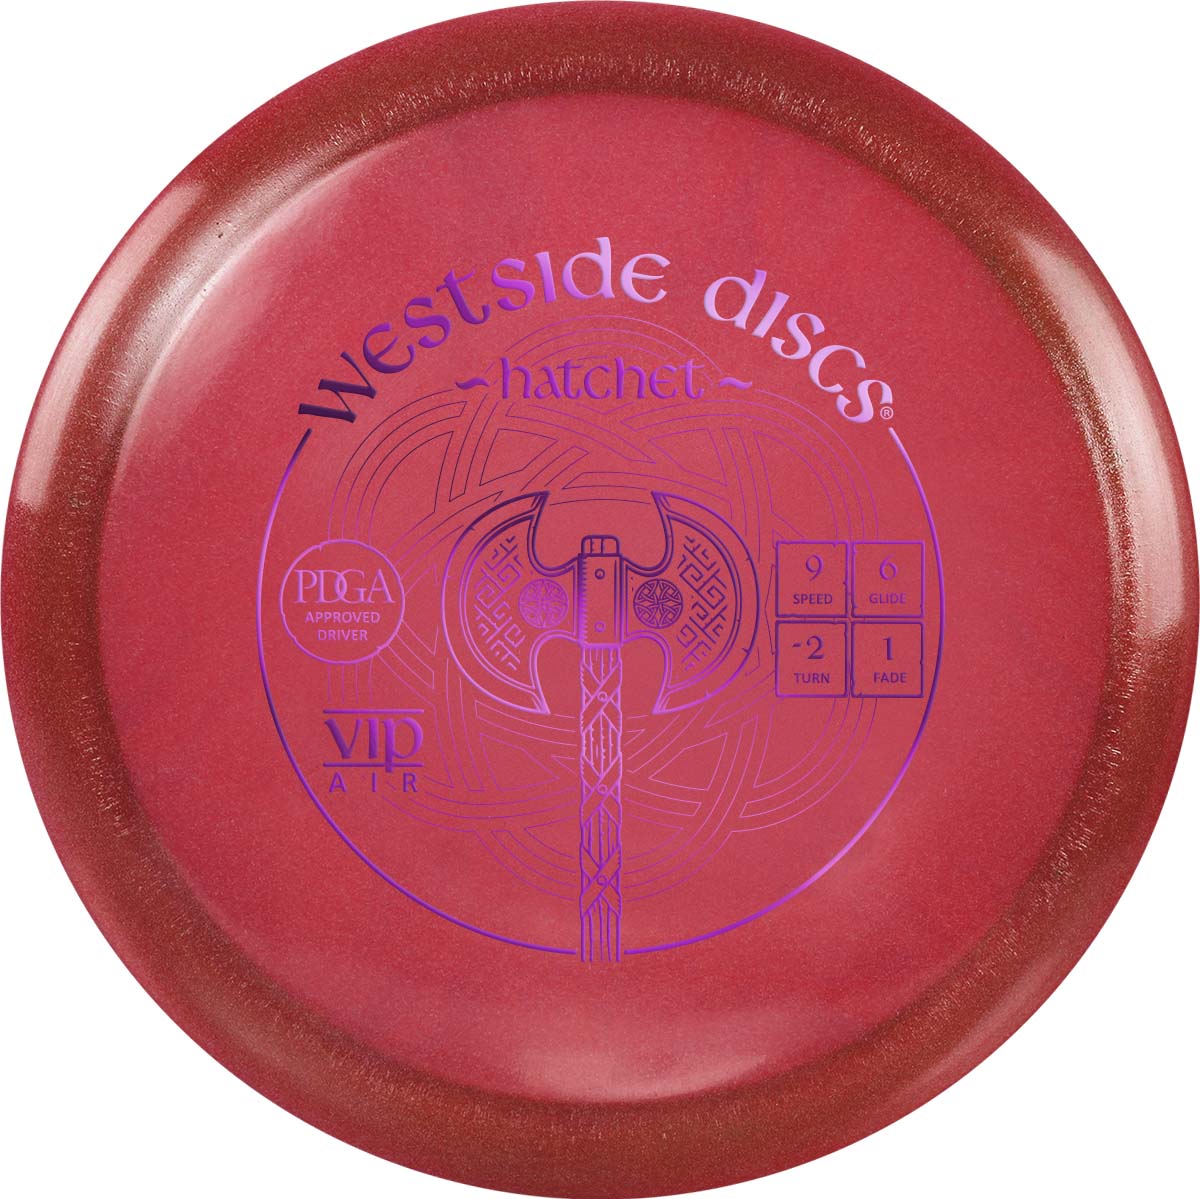 Westside Discs VIP AIR Hatchet Disc